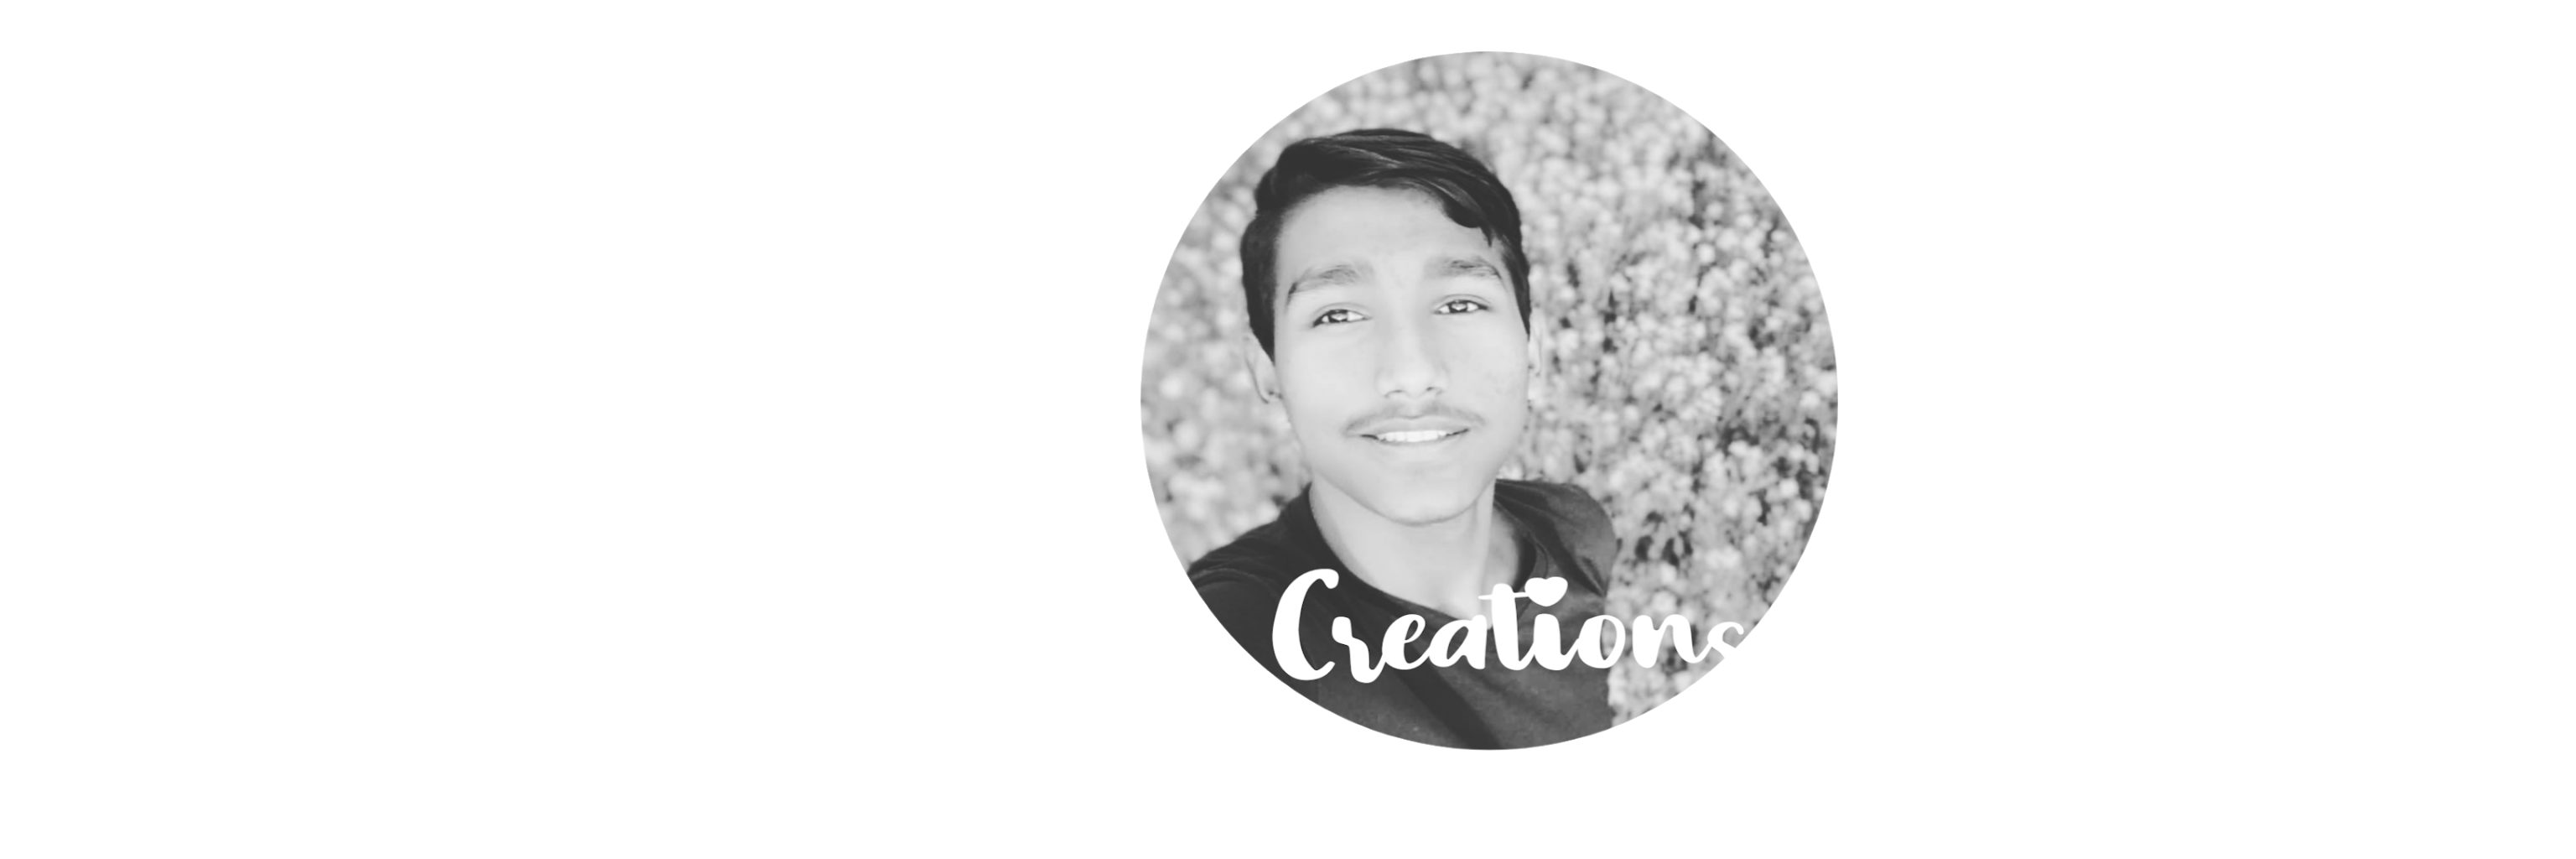 Mahbub Mahin's Portfolio  